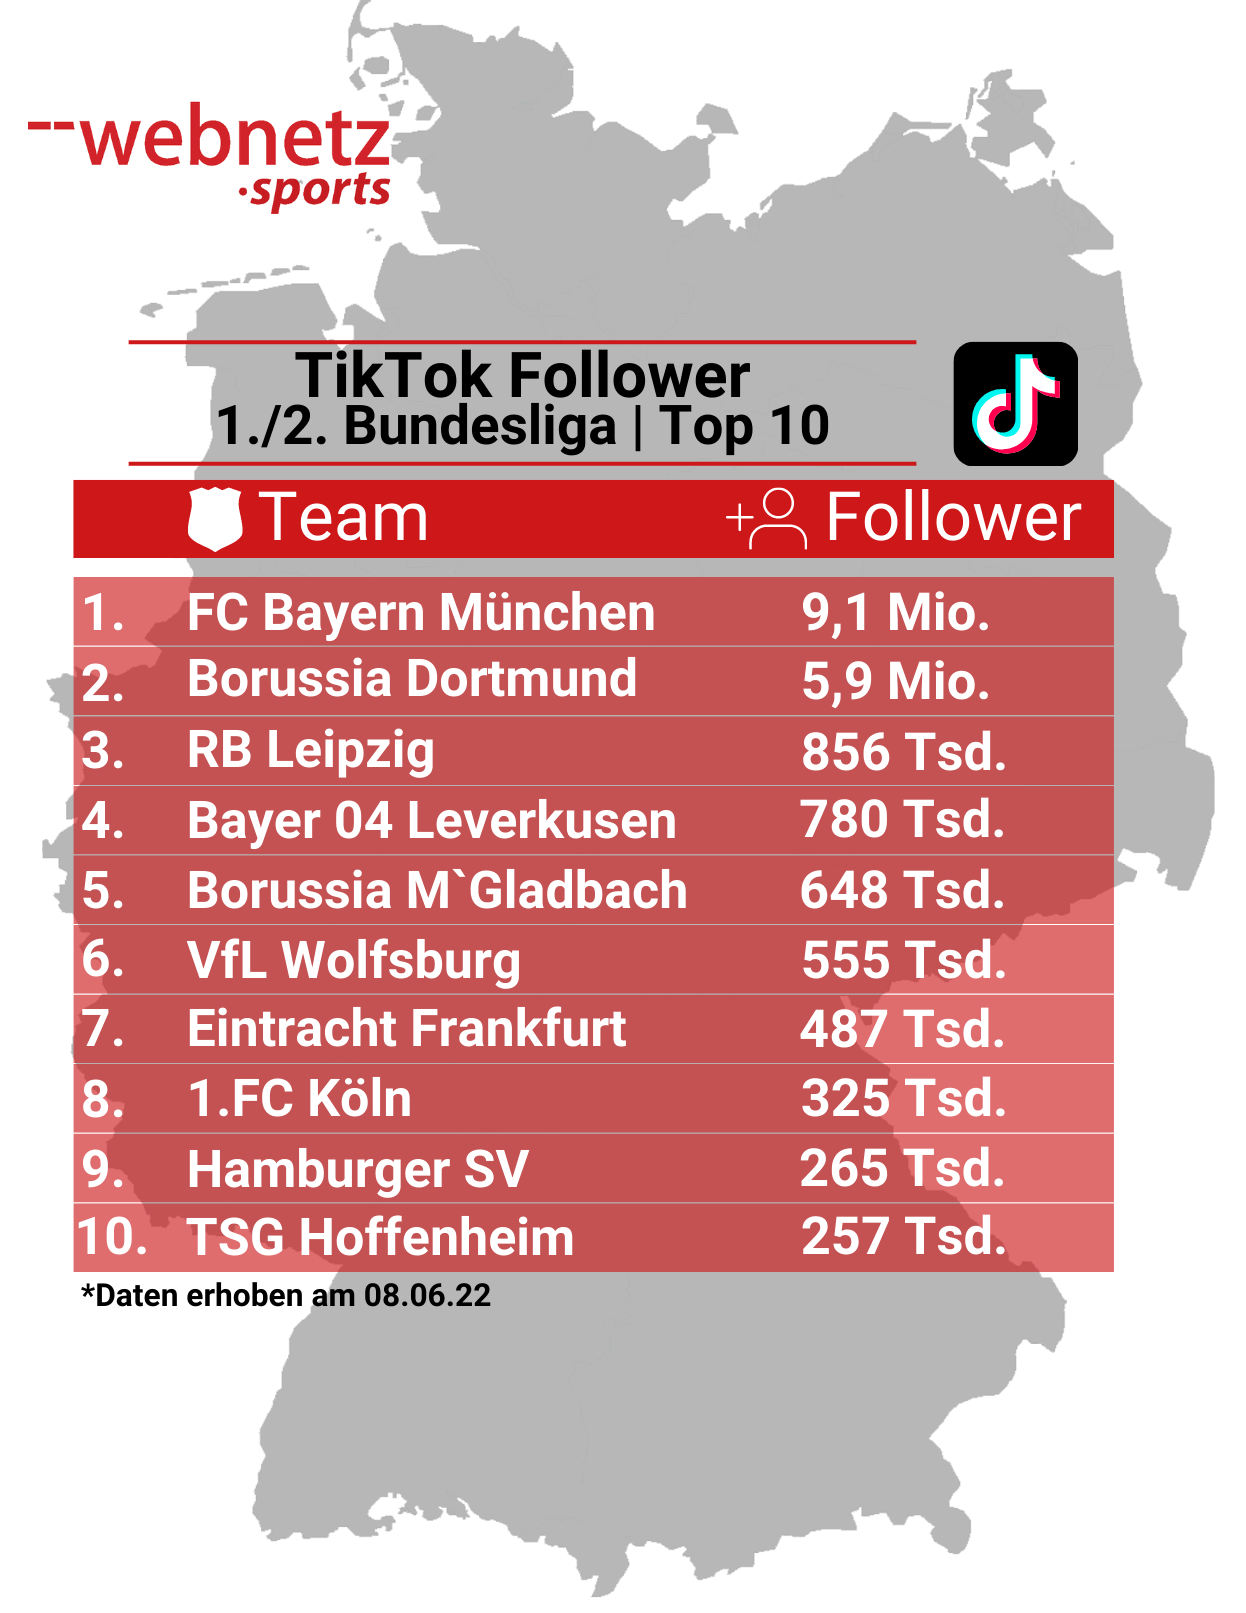 TikTok Top 10 Follower Bundesliga